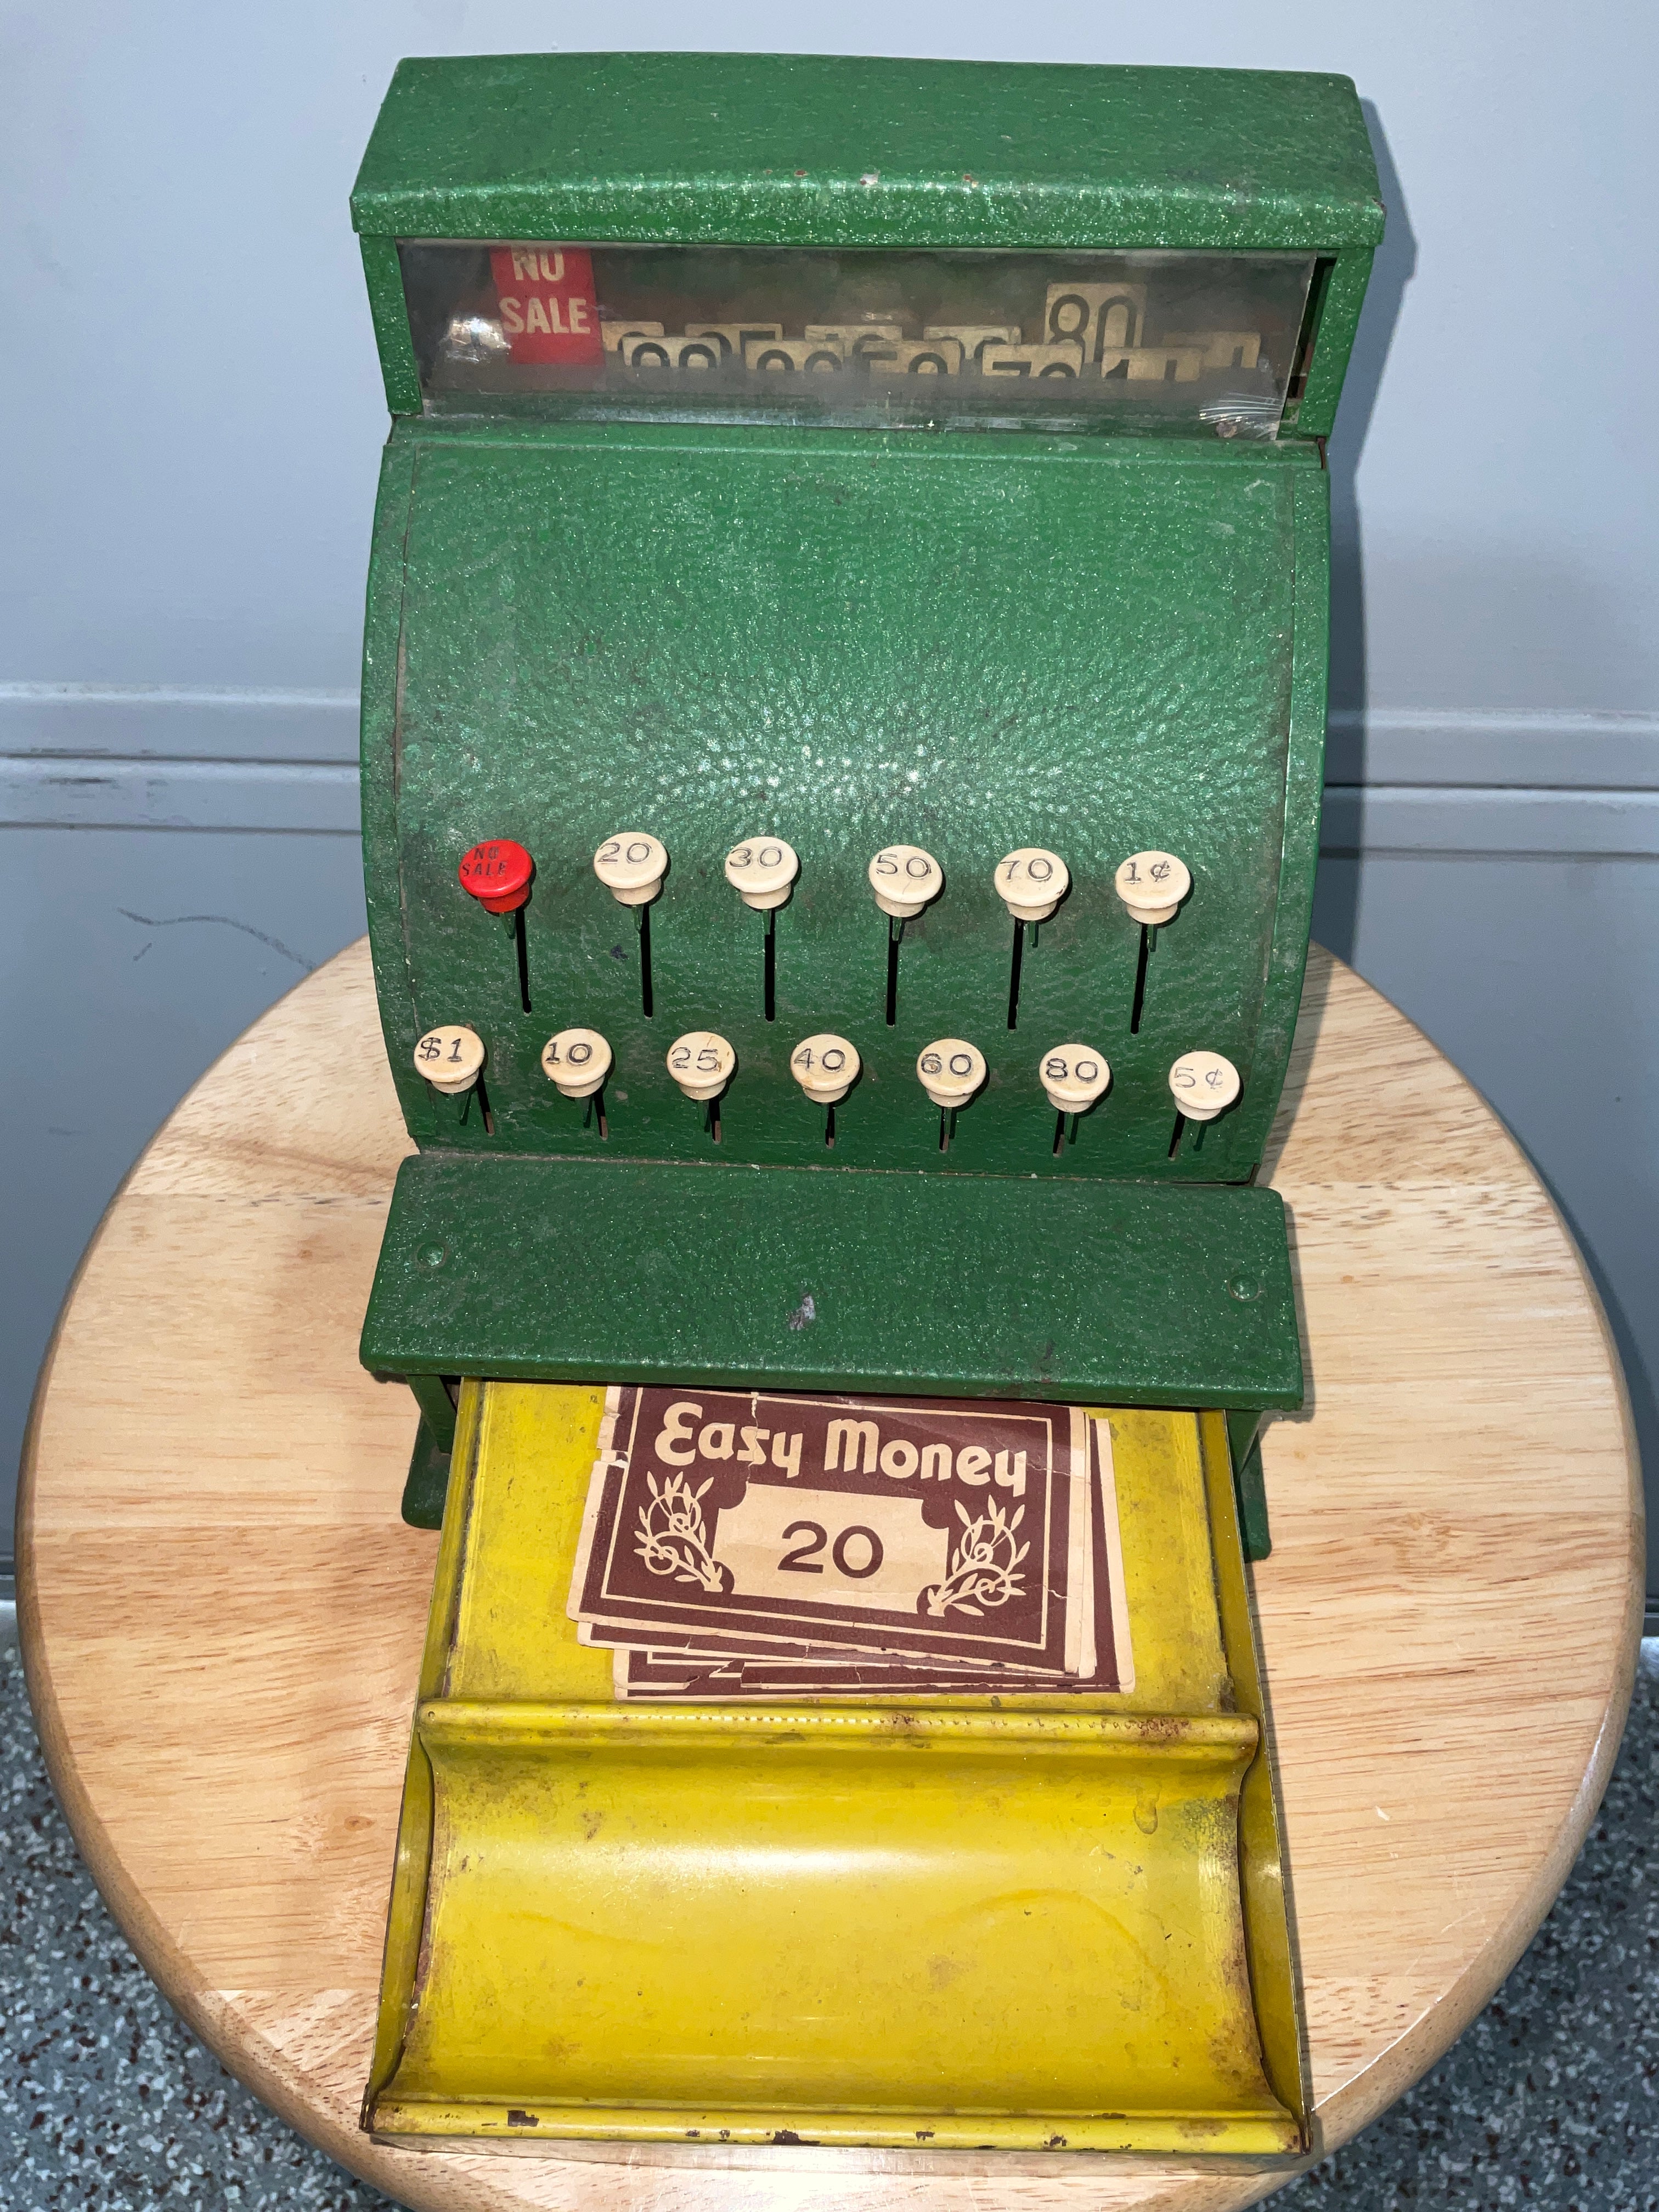 Vintage Metal Tom Thumb Cash Register by Western Stamping Co